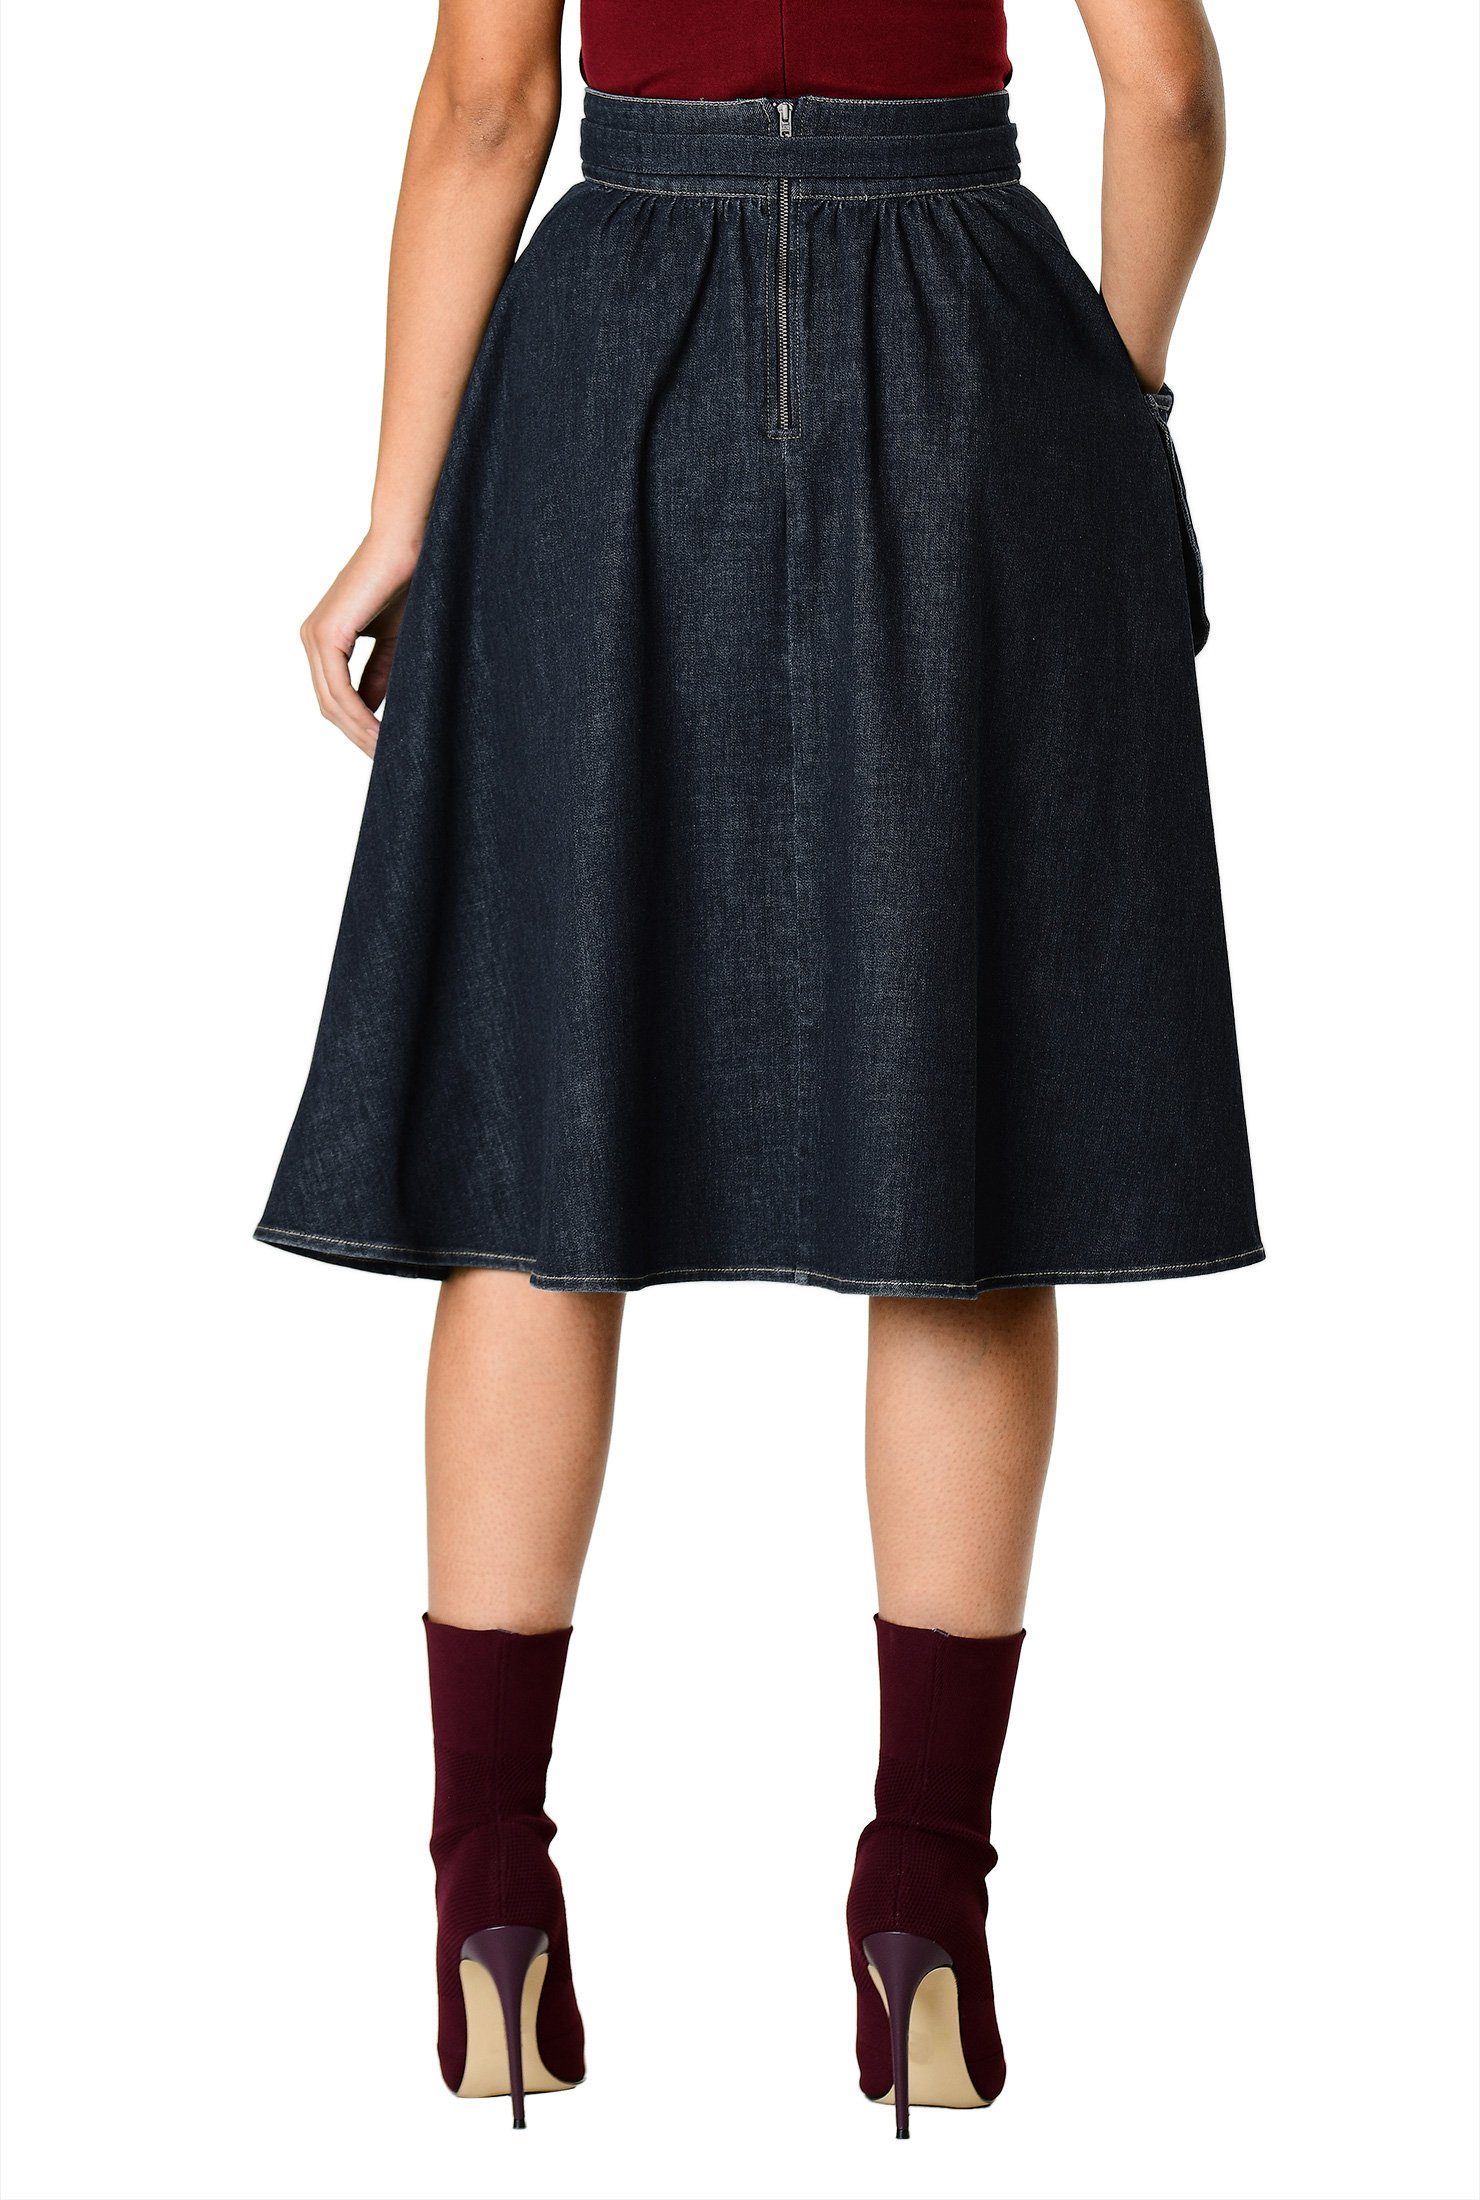 Shop Faux-wrap denim belted skirt | eShakti